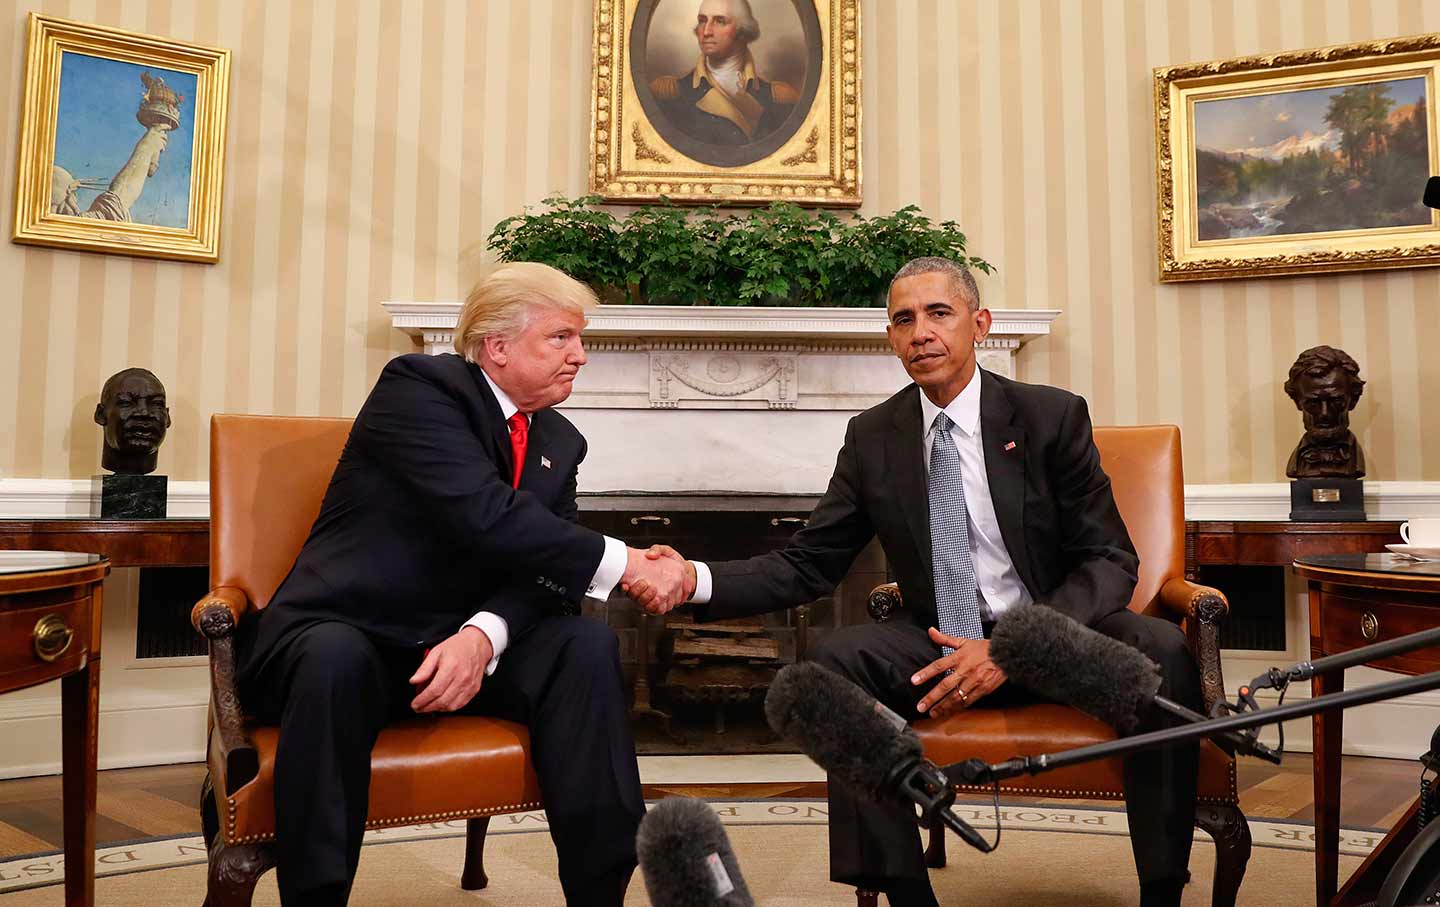 Trump and Obama meet